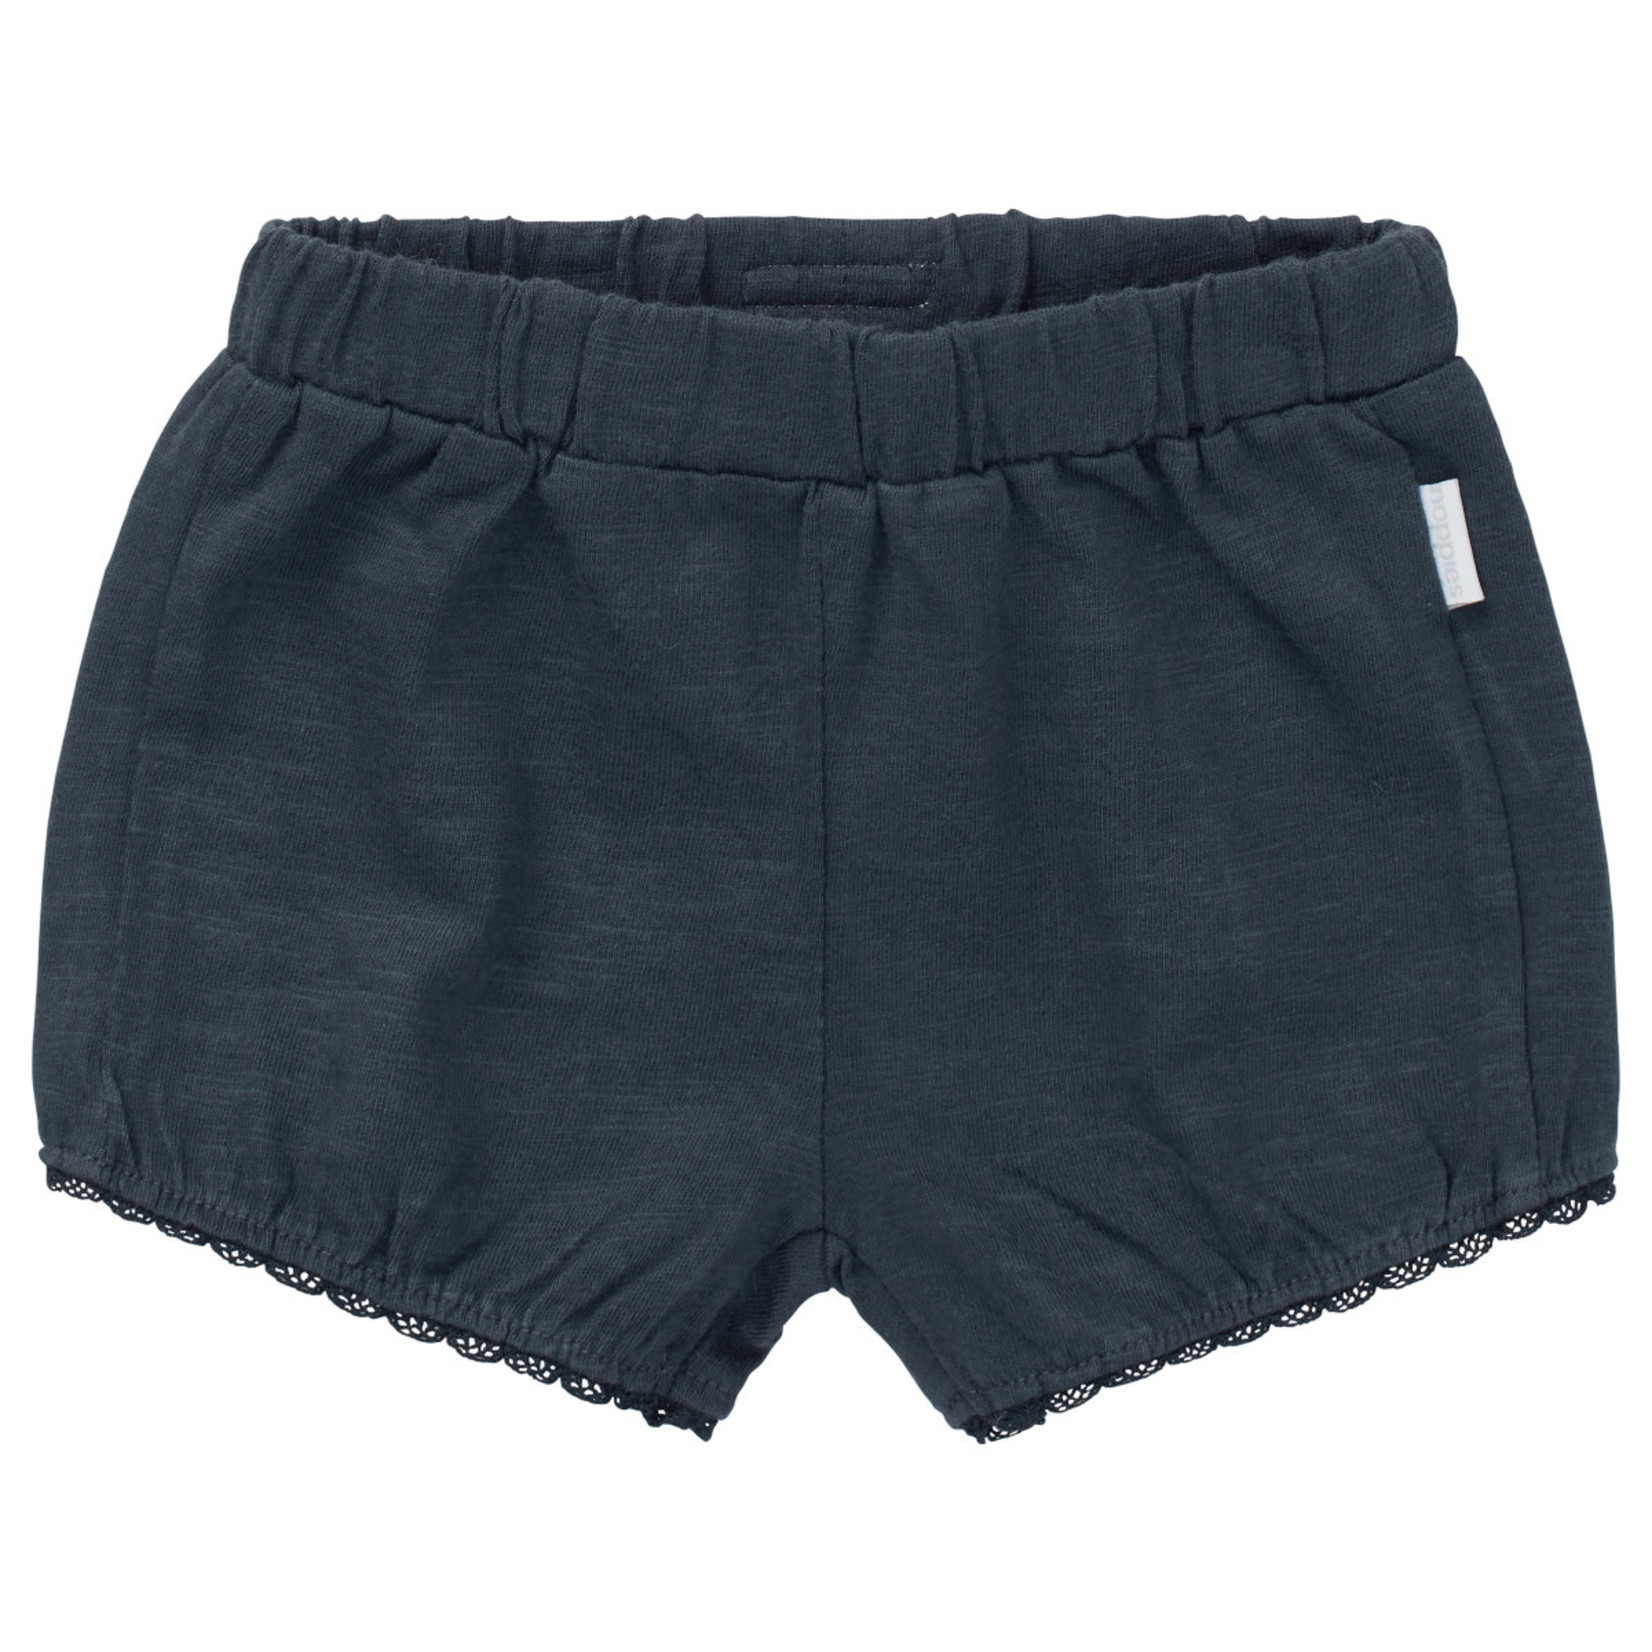 Noppies NOPPIES - Navy soft cotton shorts with lace border 'Amaravati'